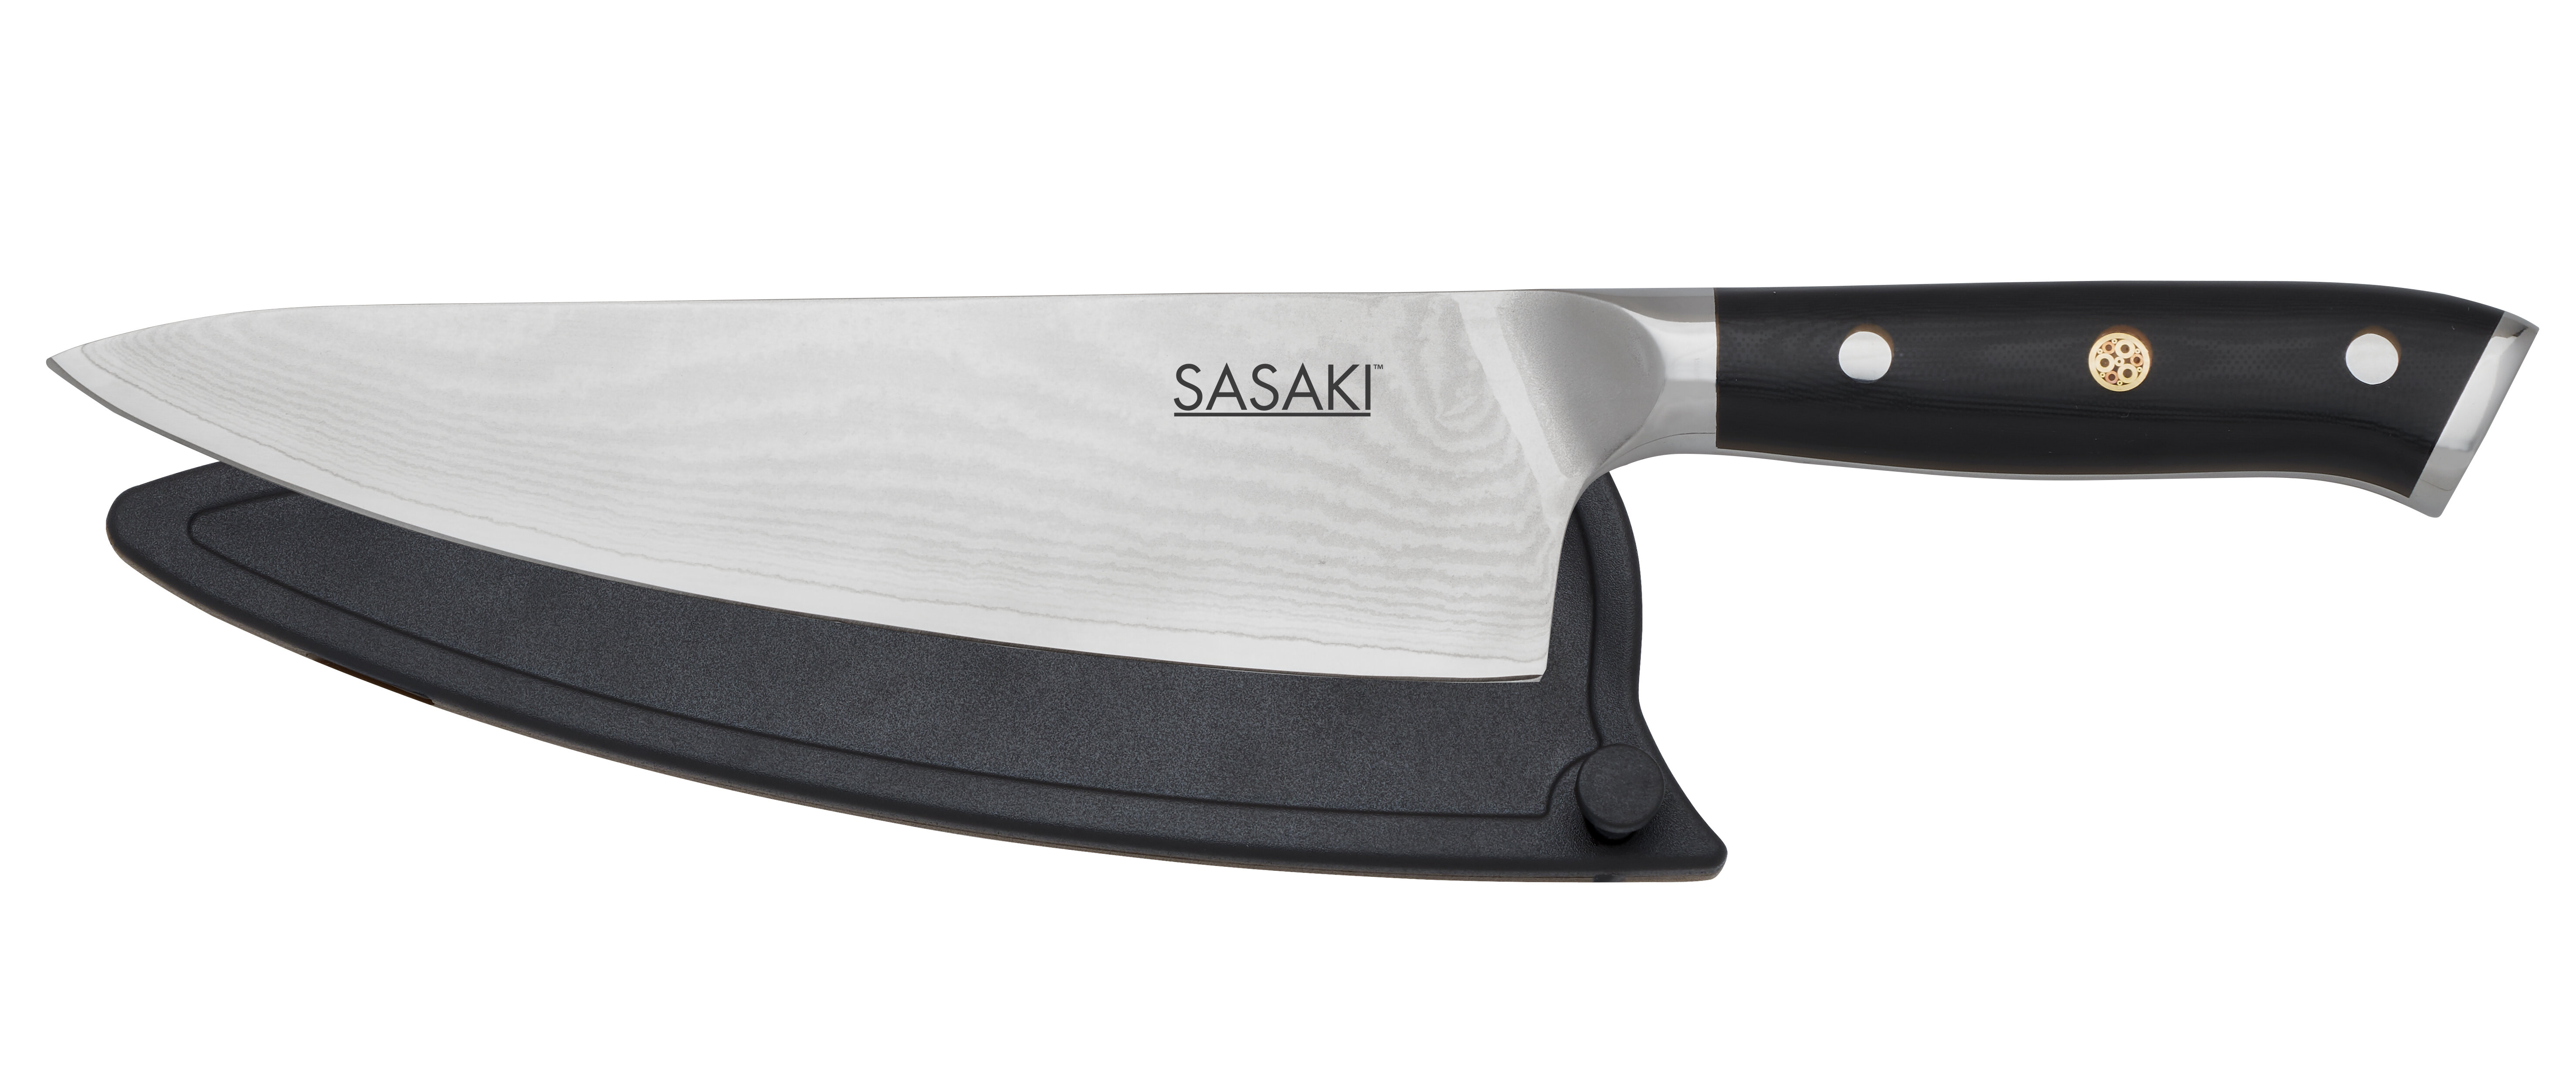 3Pcs Professional Knife Set Japanese AUS-10 Kitchen Chef Knife